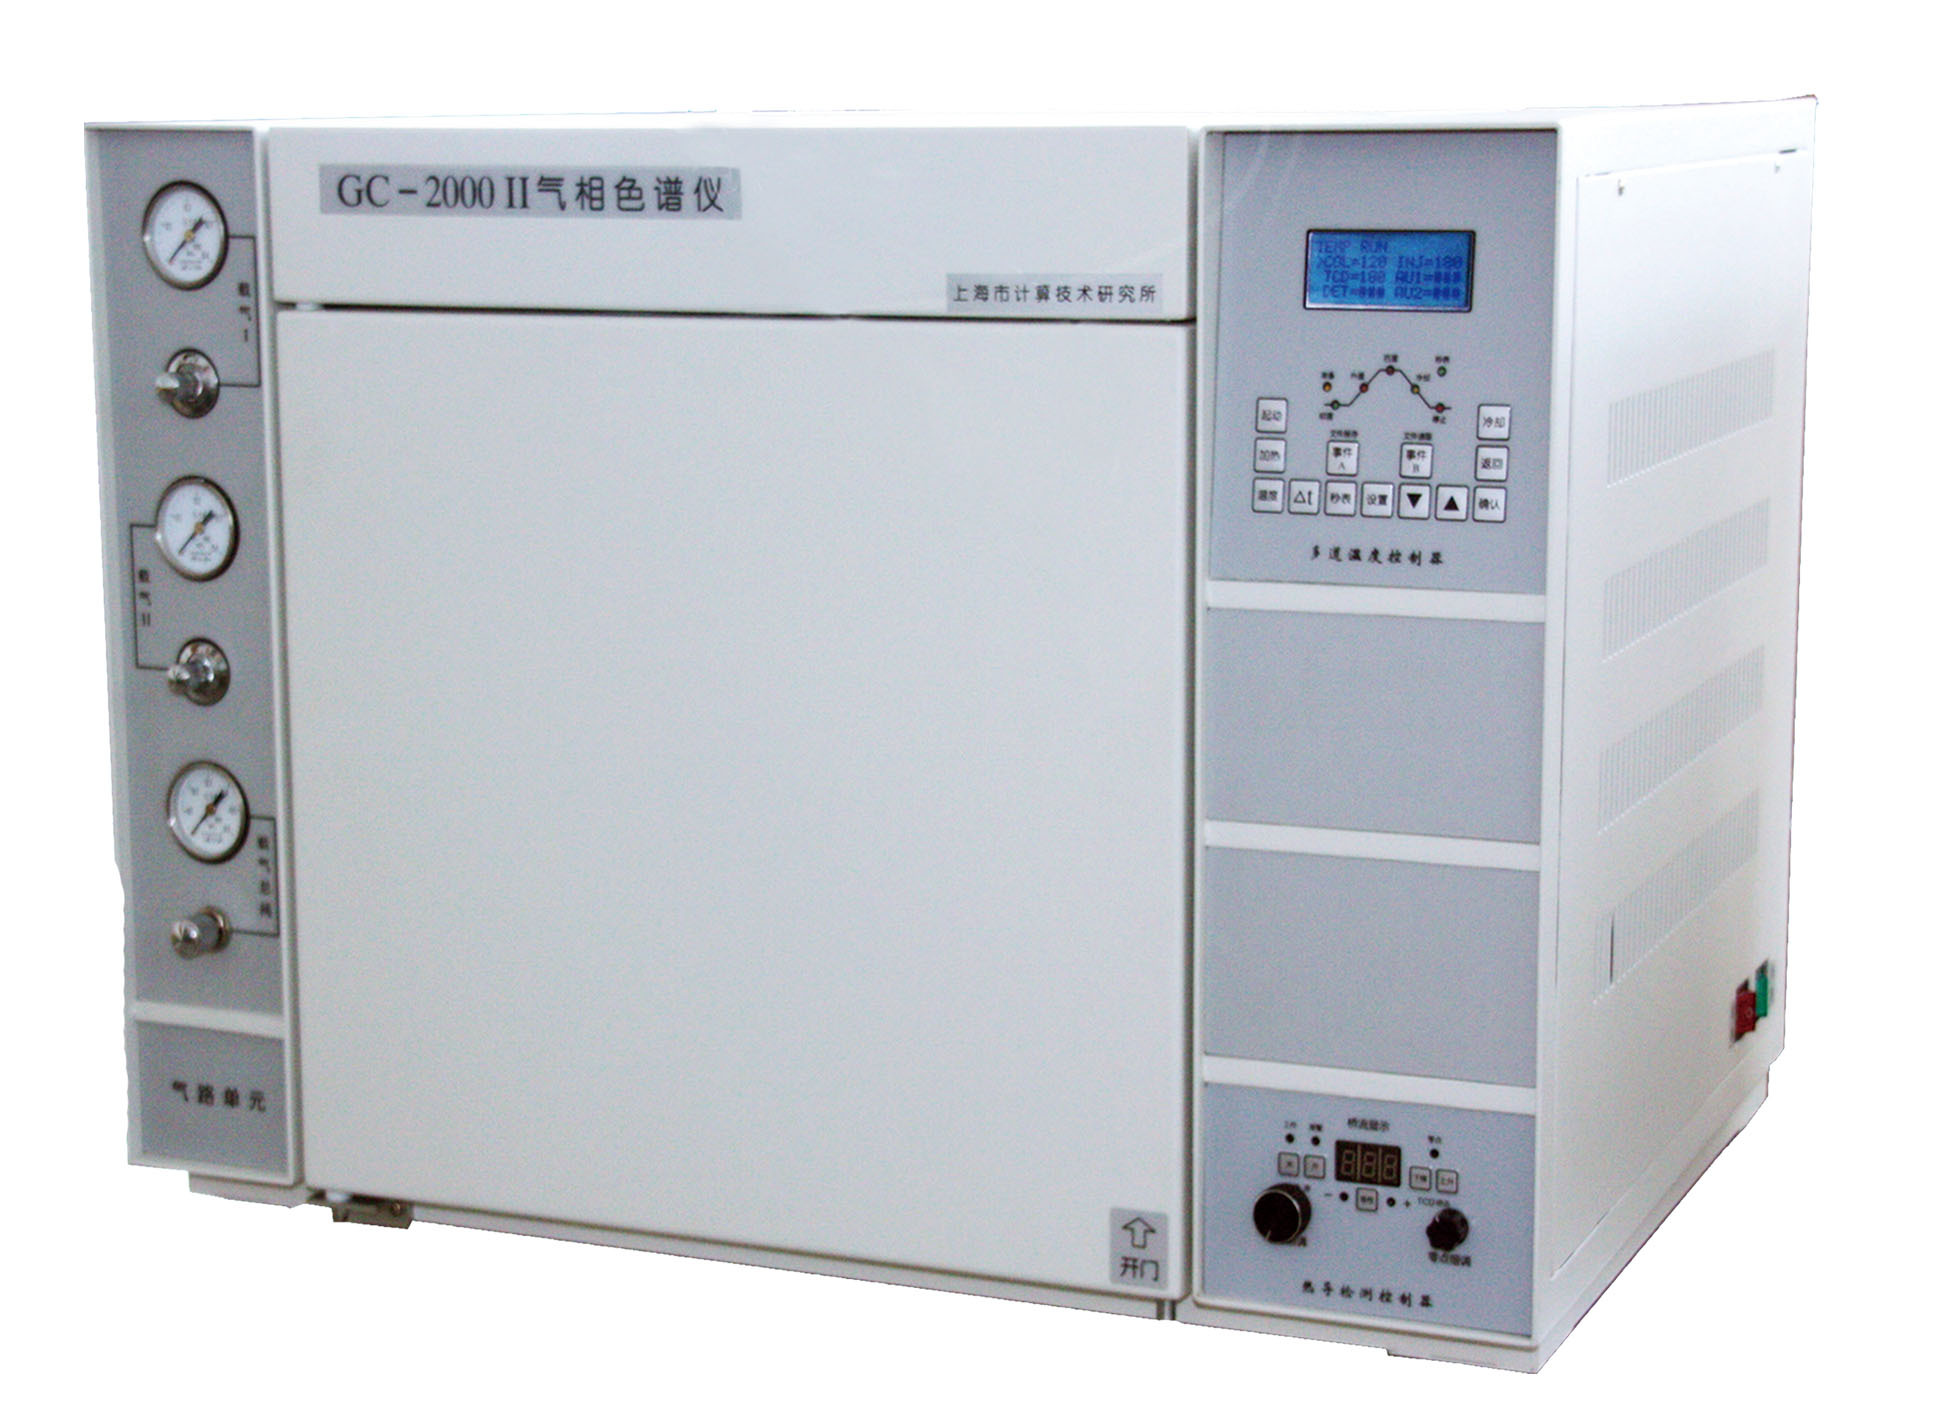 GC-2000II型气相色谱仪